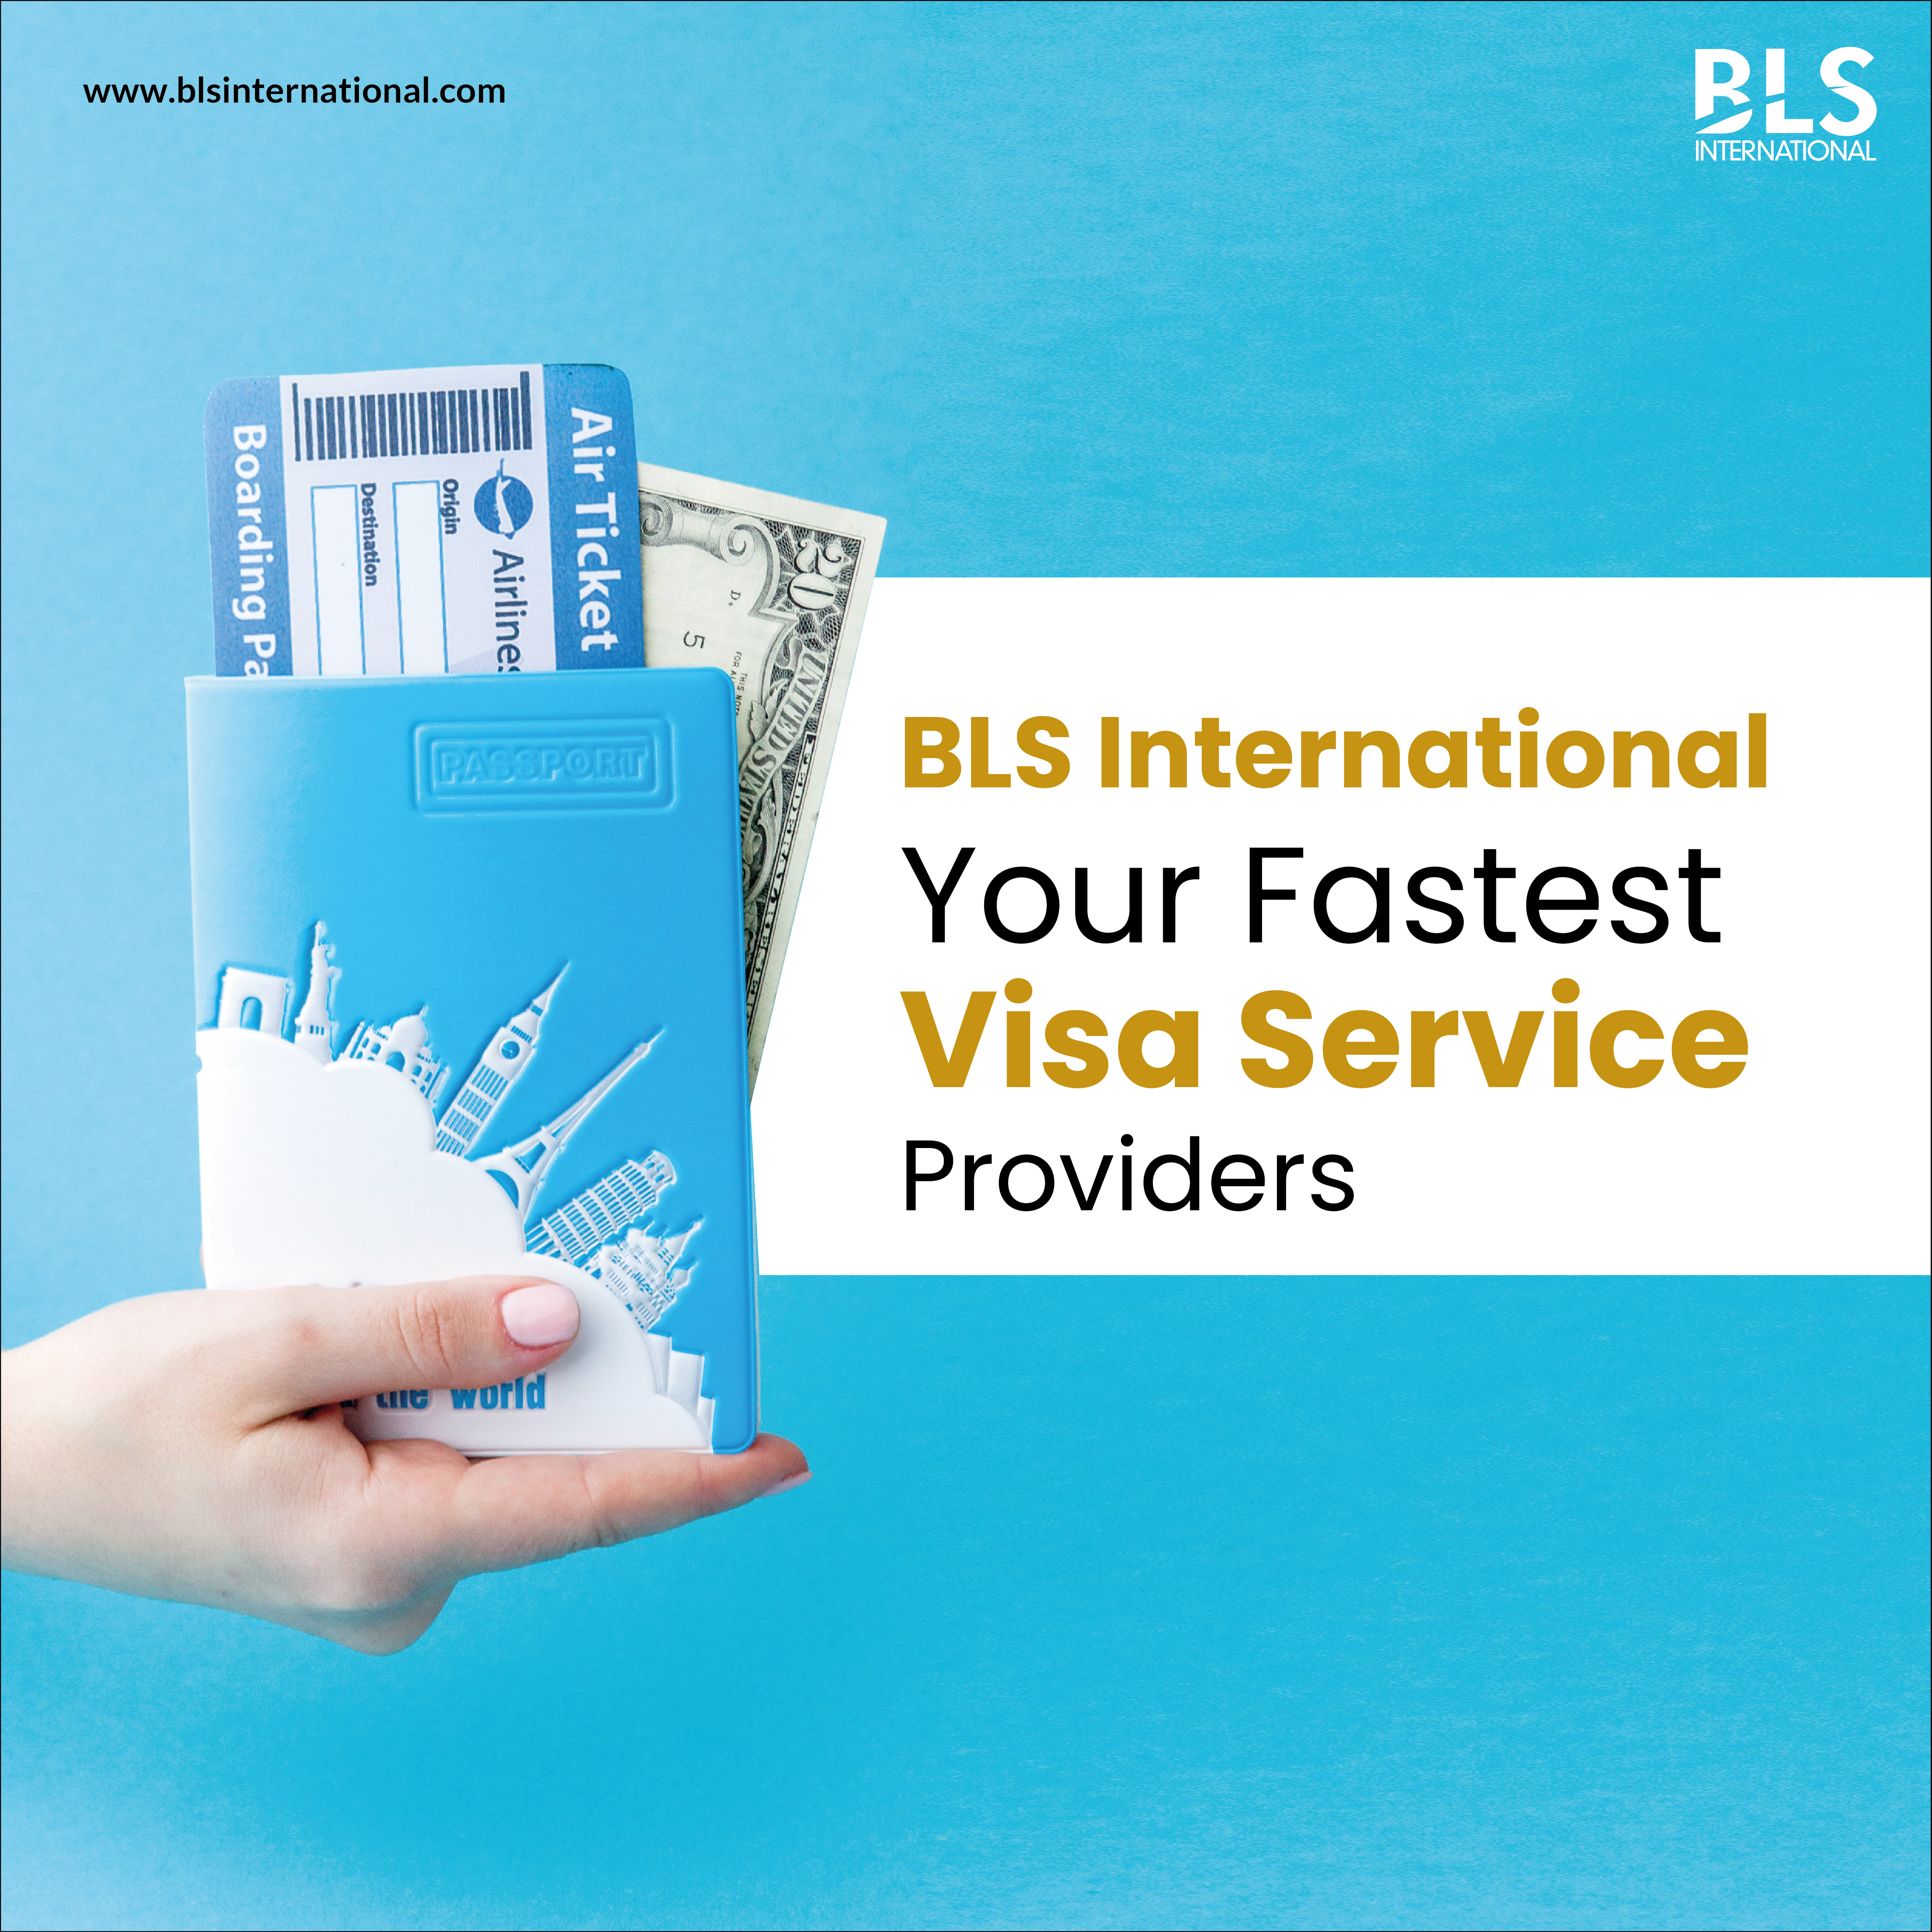 BLS International Your Fastest Visa Service Providers